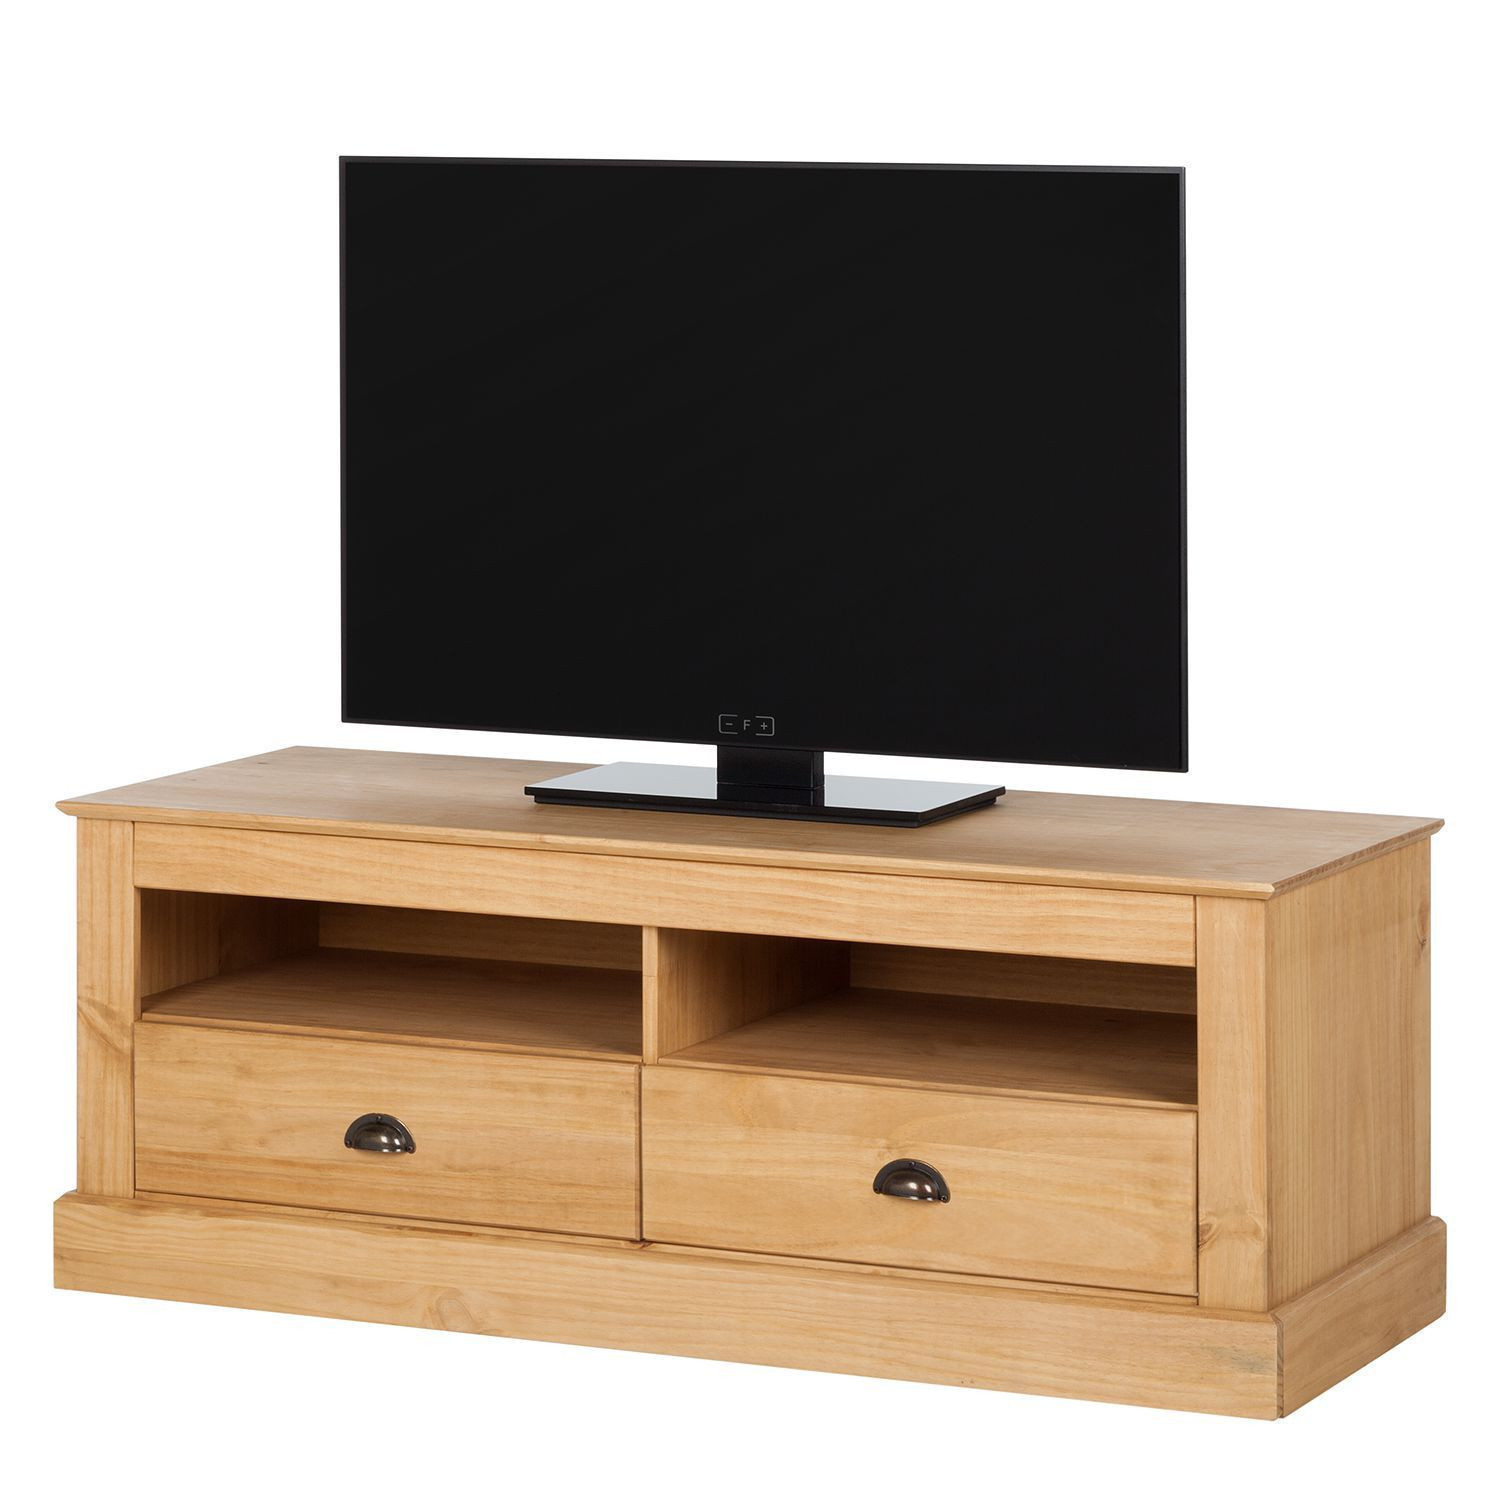 meuble tv promo meuble tv petit espace 30 frais meuble tv promo stock meubles ardena of meuble tv promo